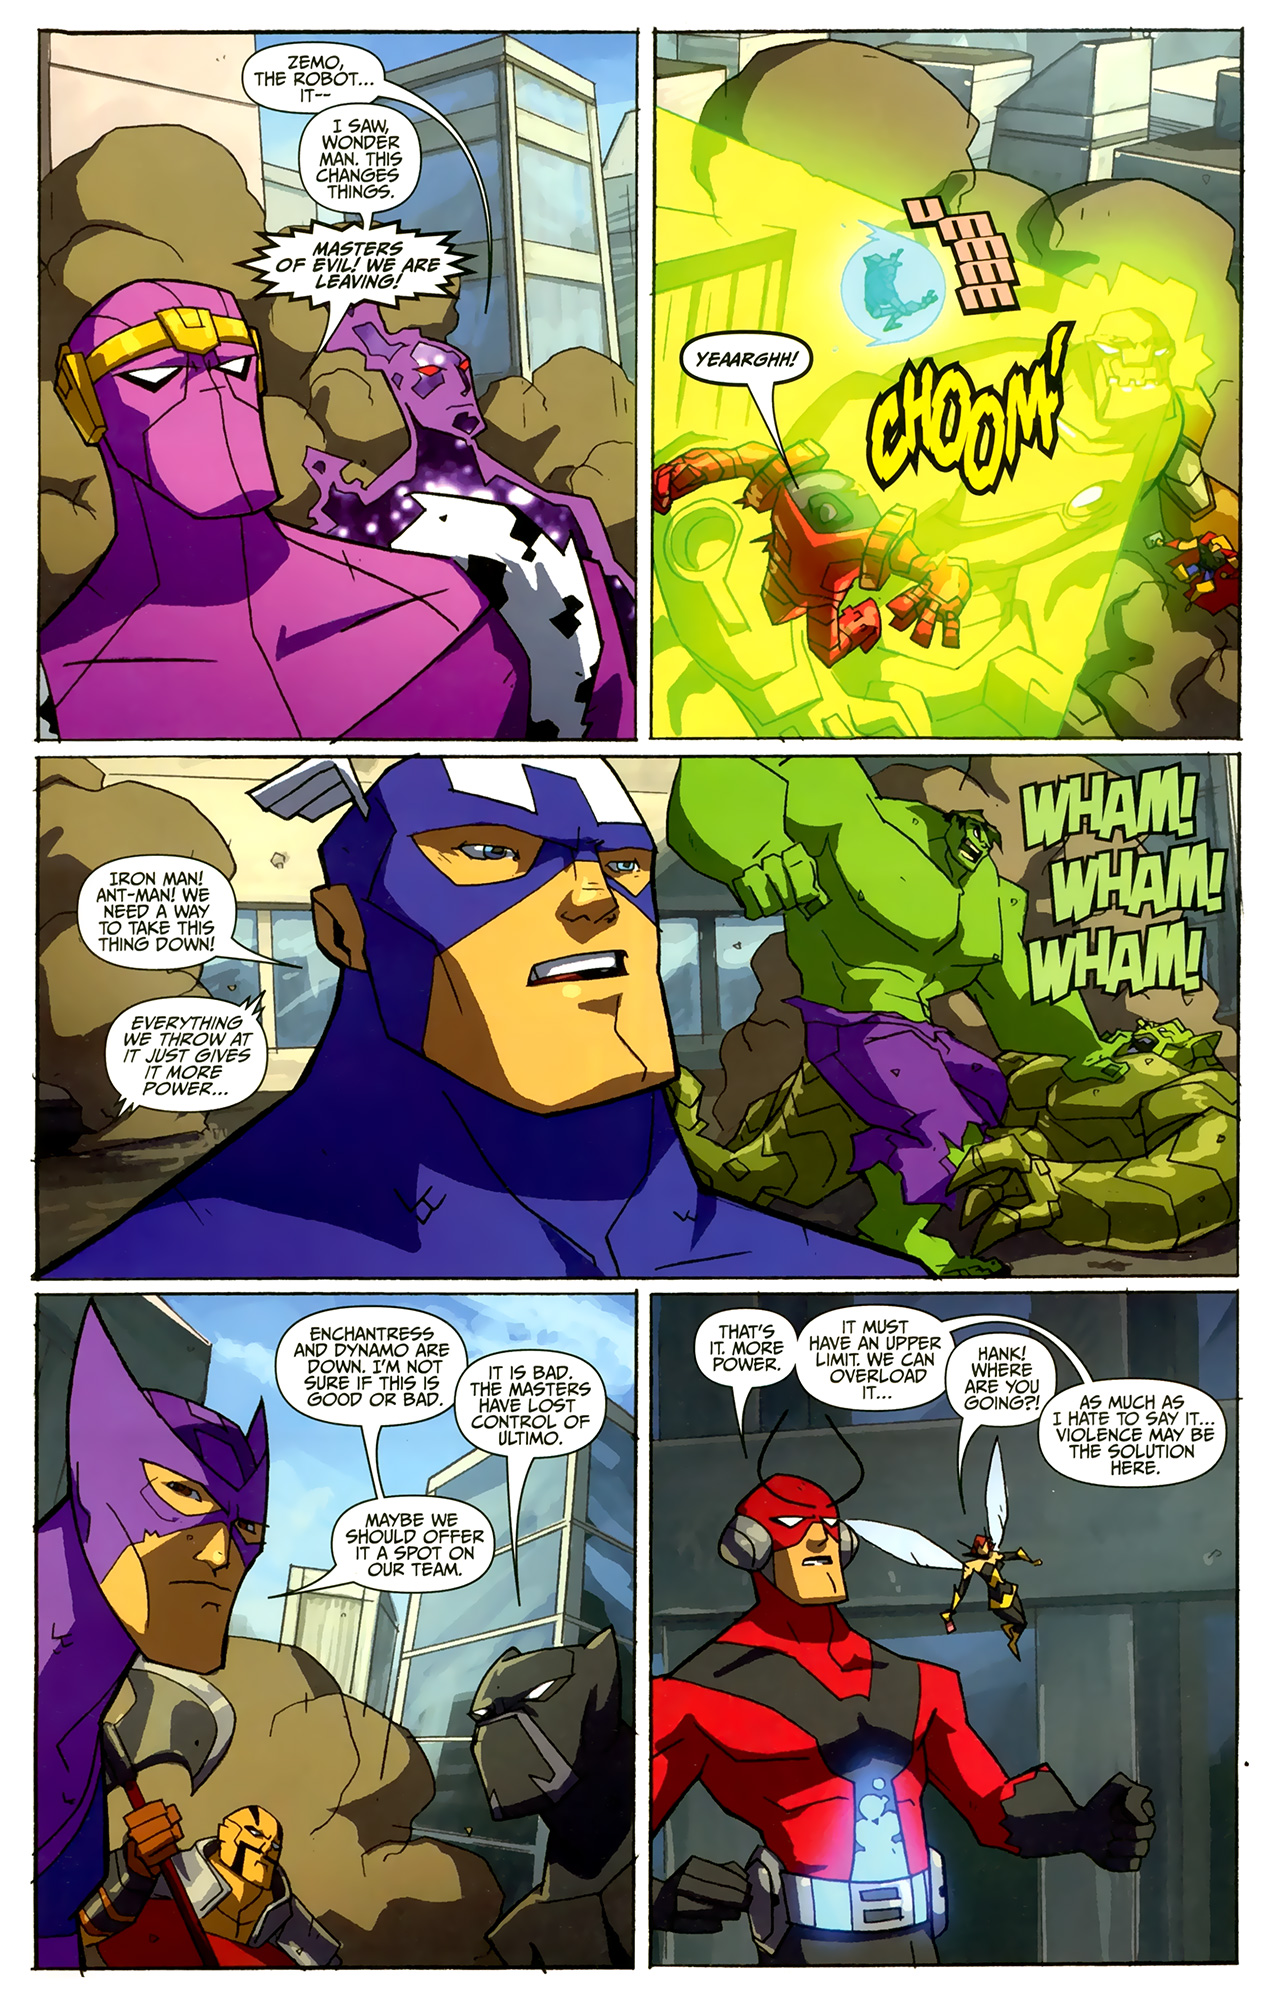 Avengers Earth S Mightiest Heroes Issue 4 Viewcomic